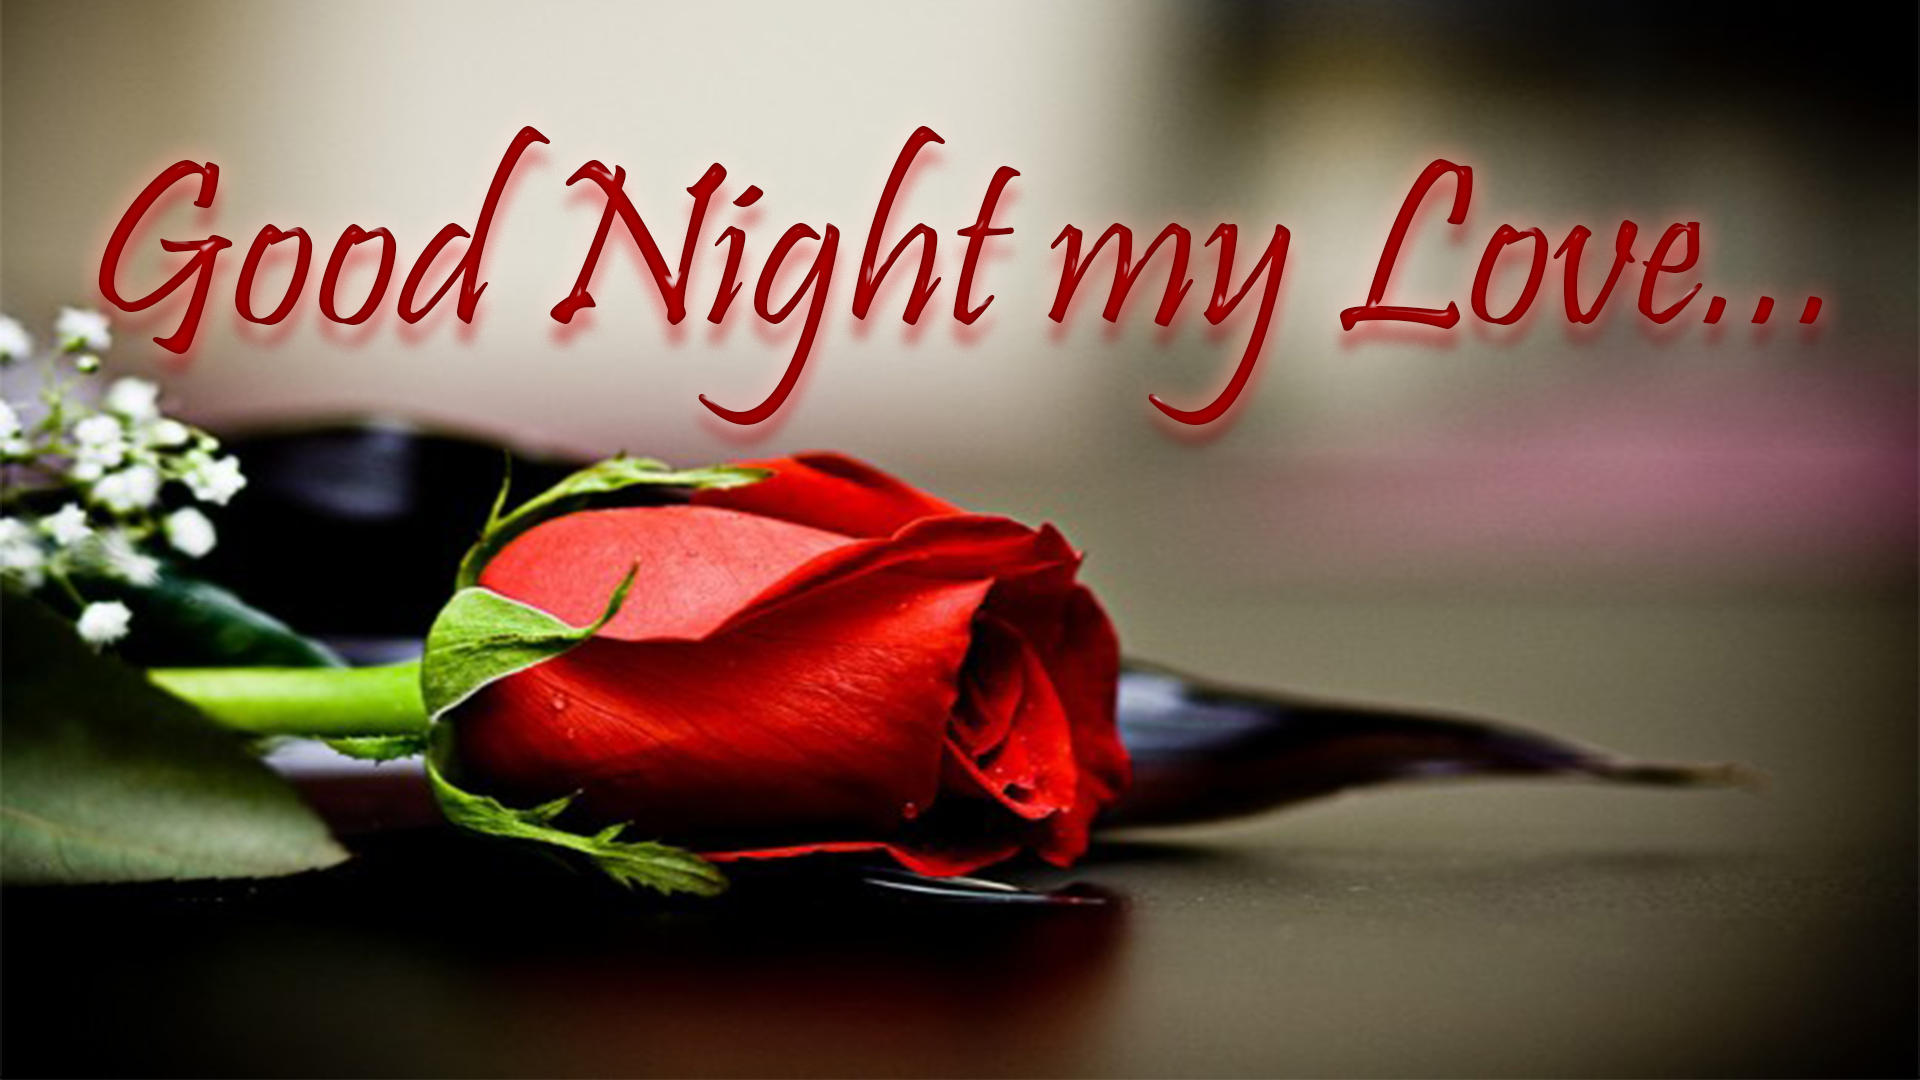 Beautiful Good Night Love HD Image. Good Night Wishes